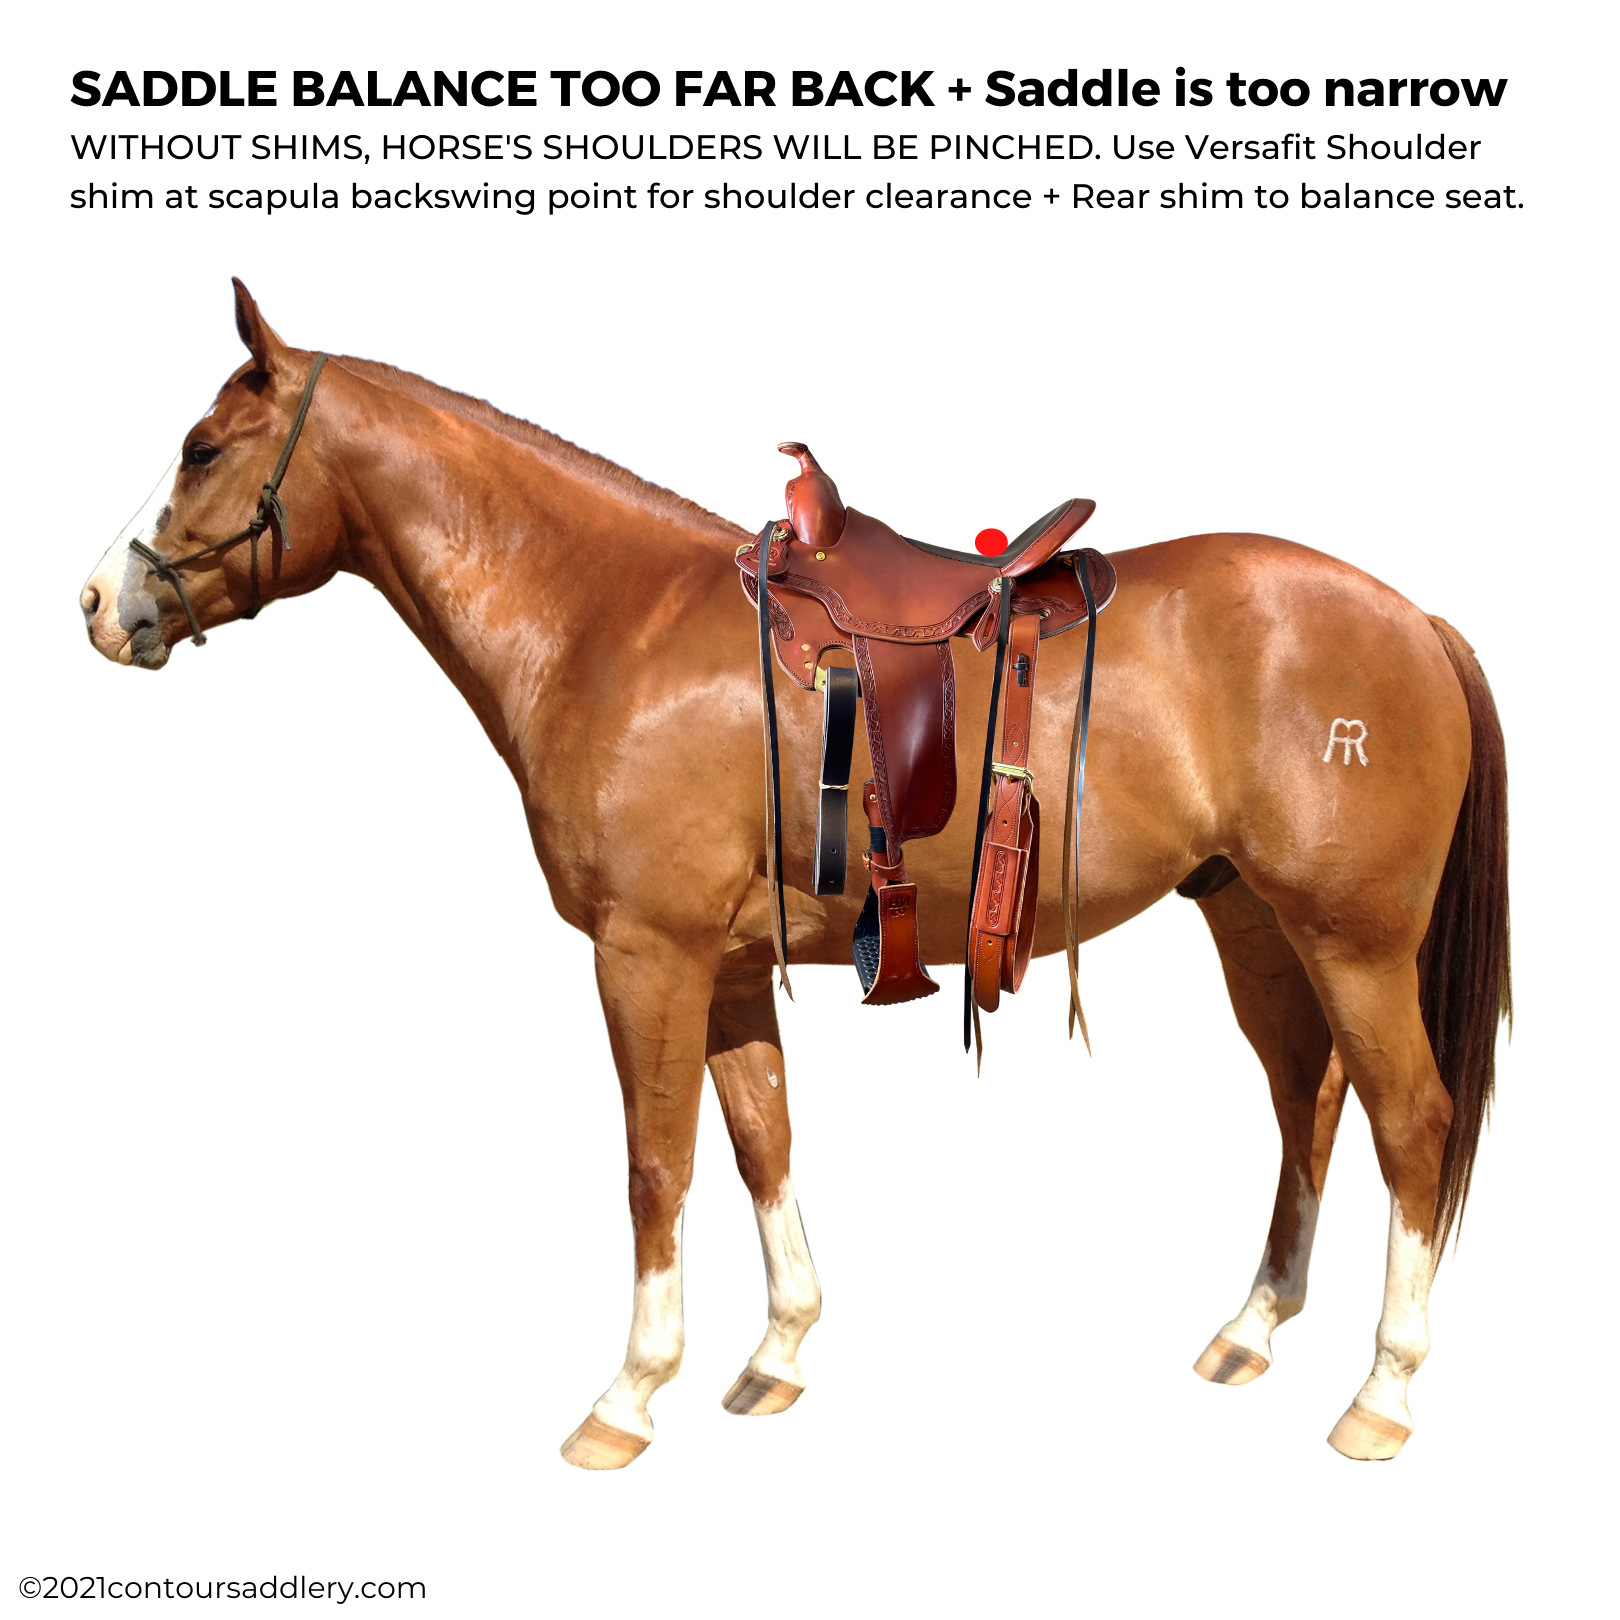 DOWNHILL horse West Saddle no shim but horse needs shoulder relief